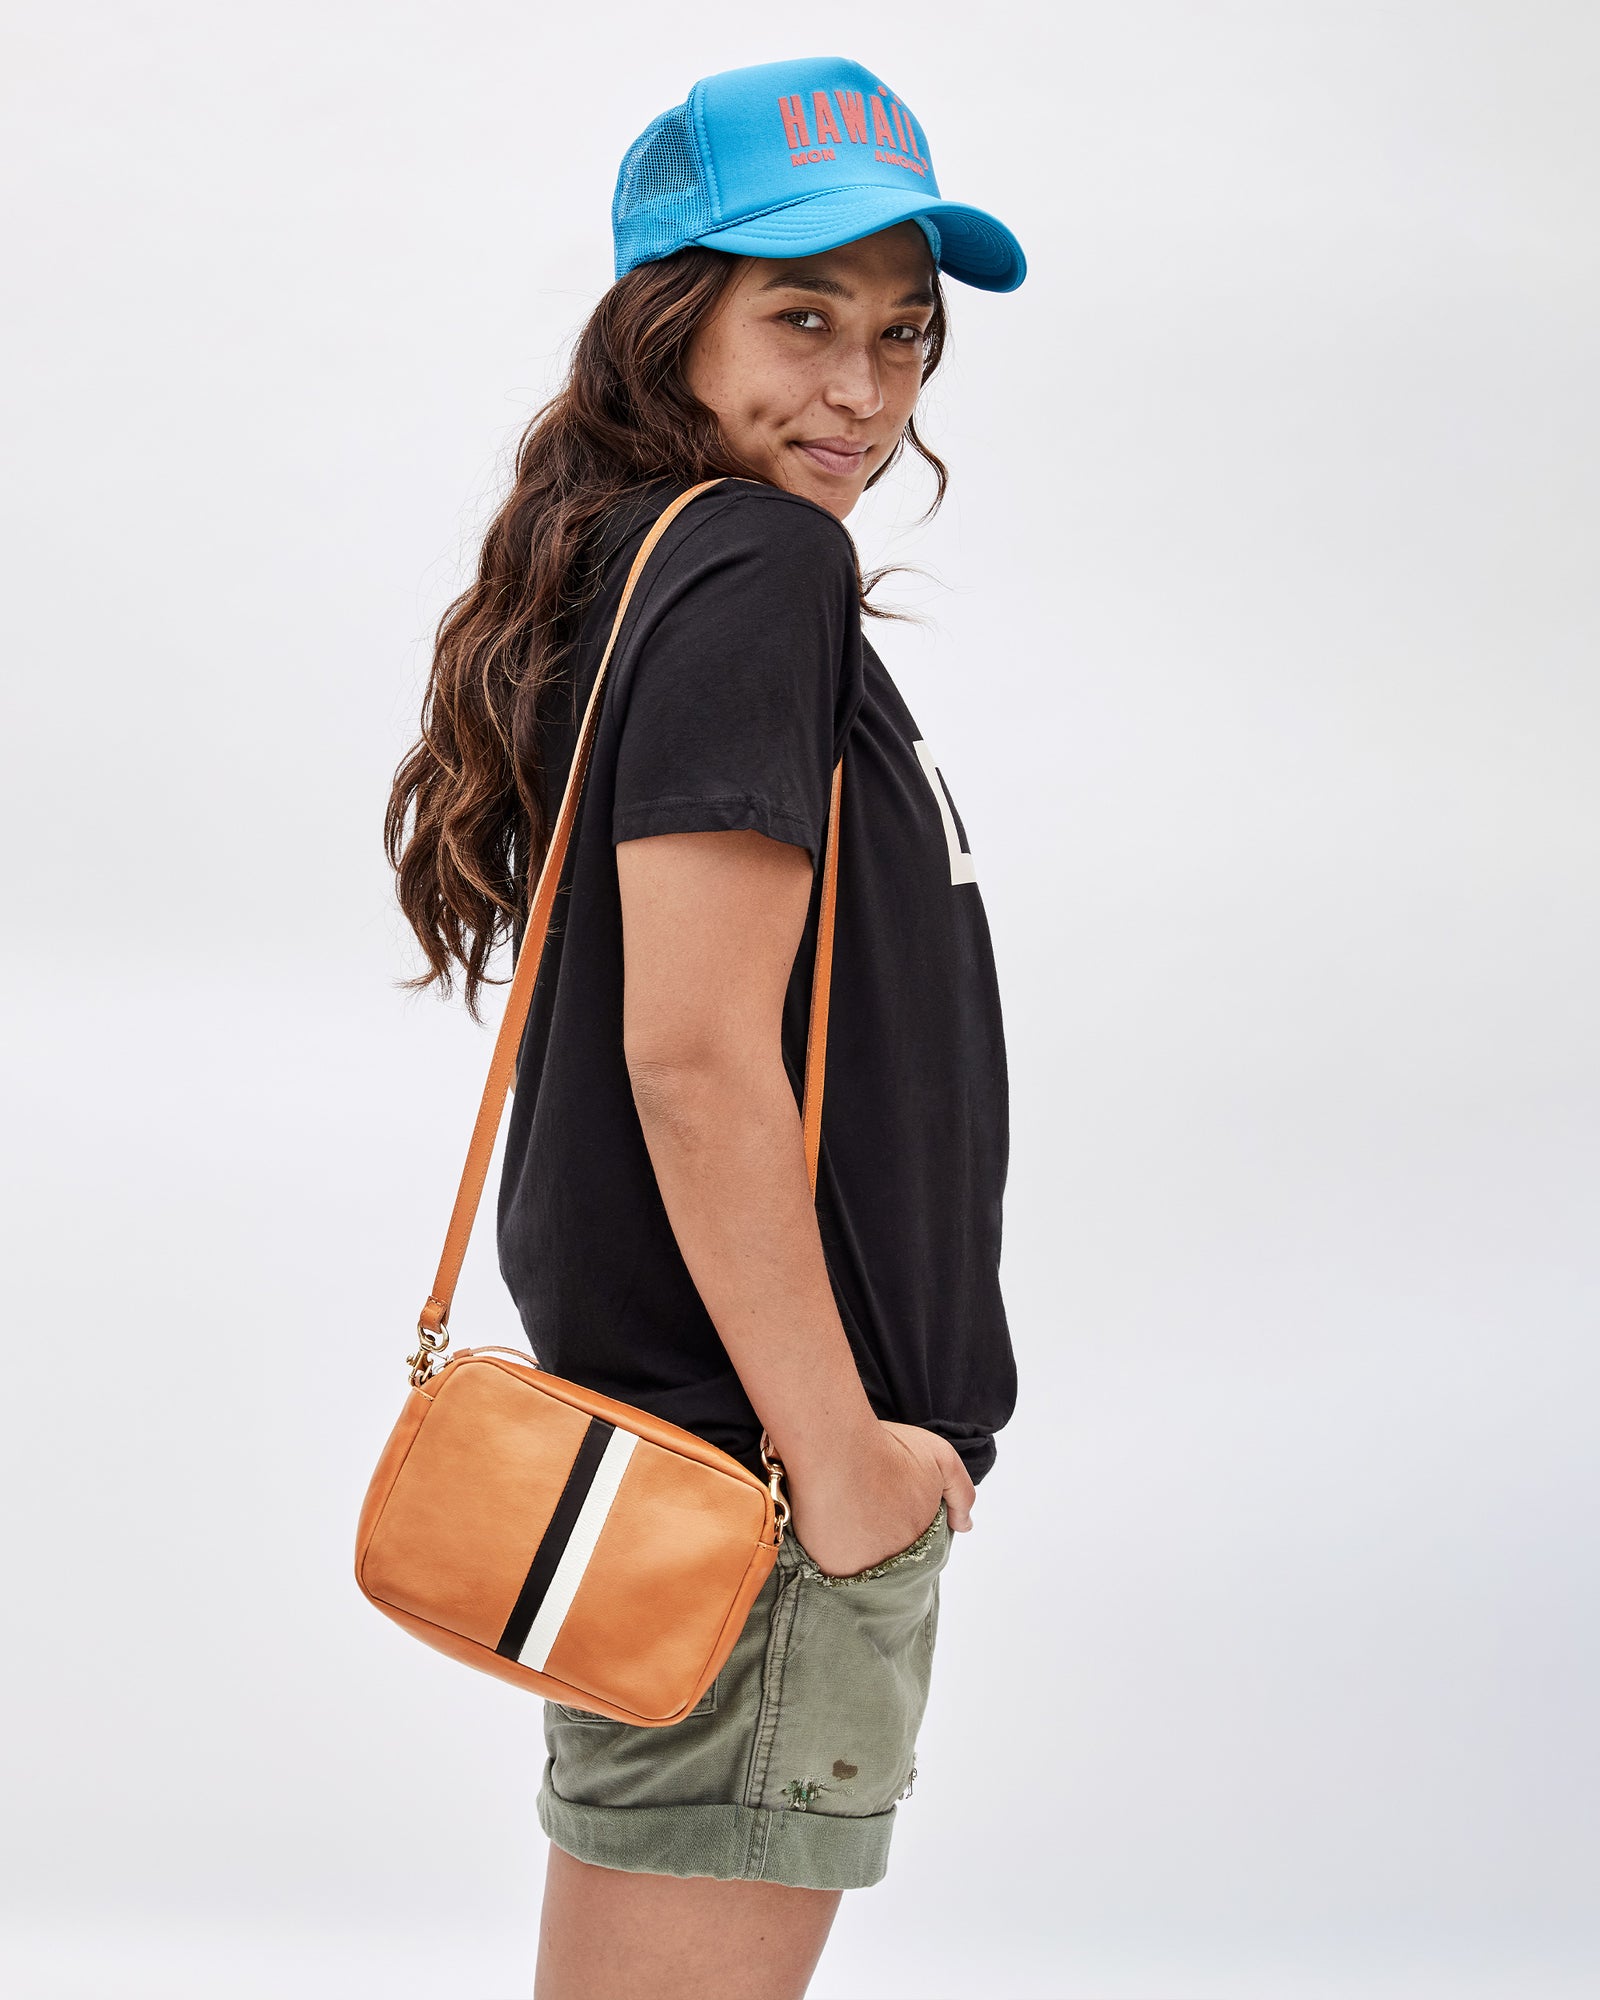 Clare V. Le Zip Bag w/ Front Pocket in Cognac & Pacific Stripe